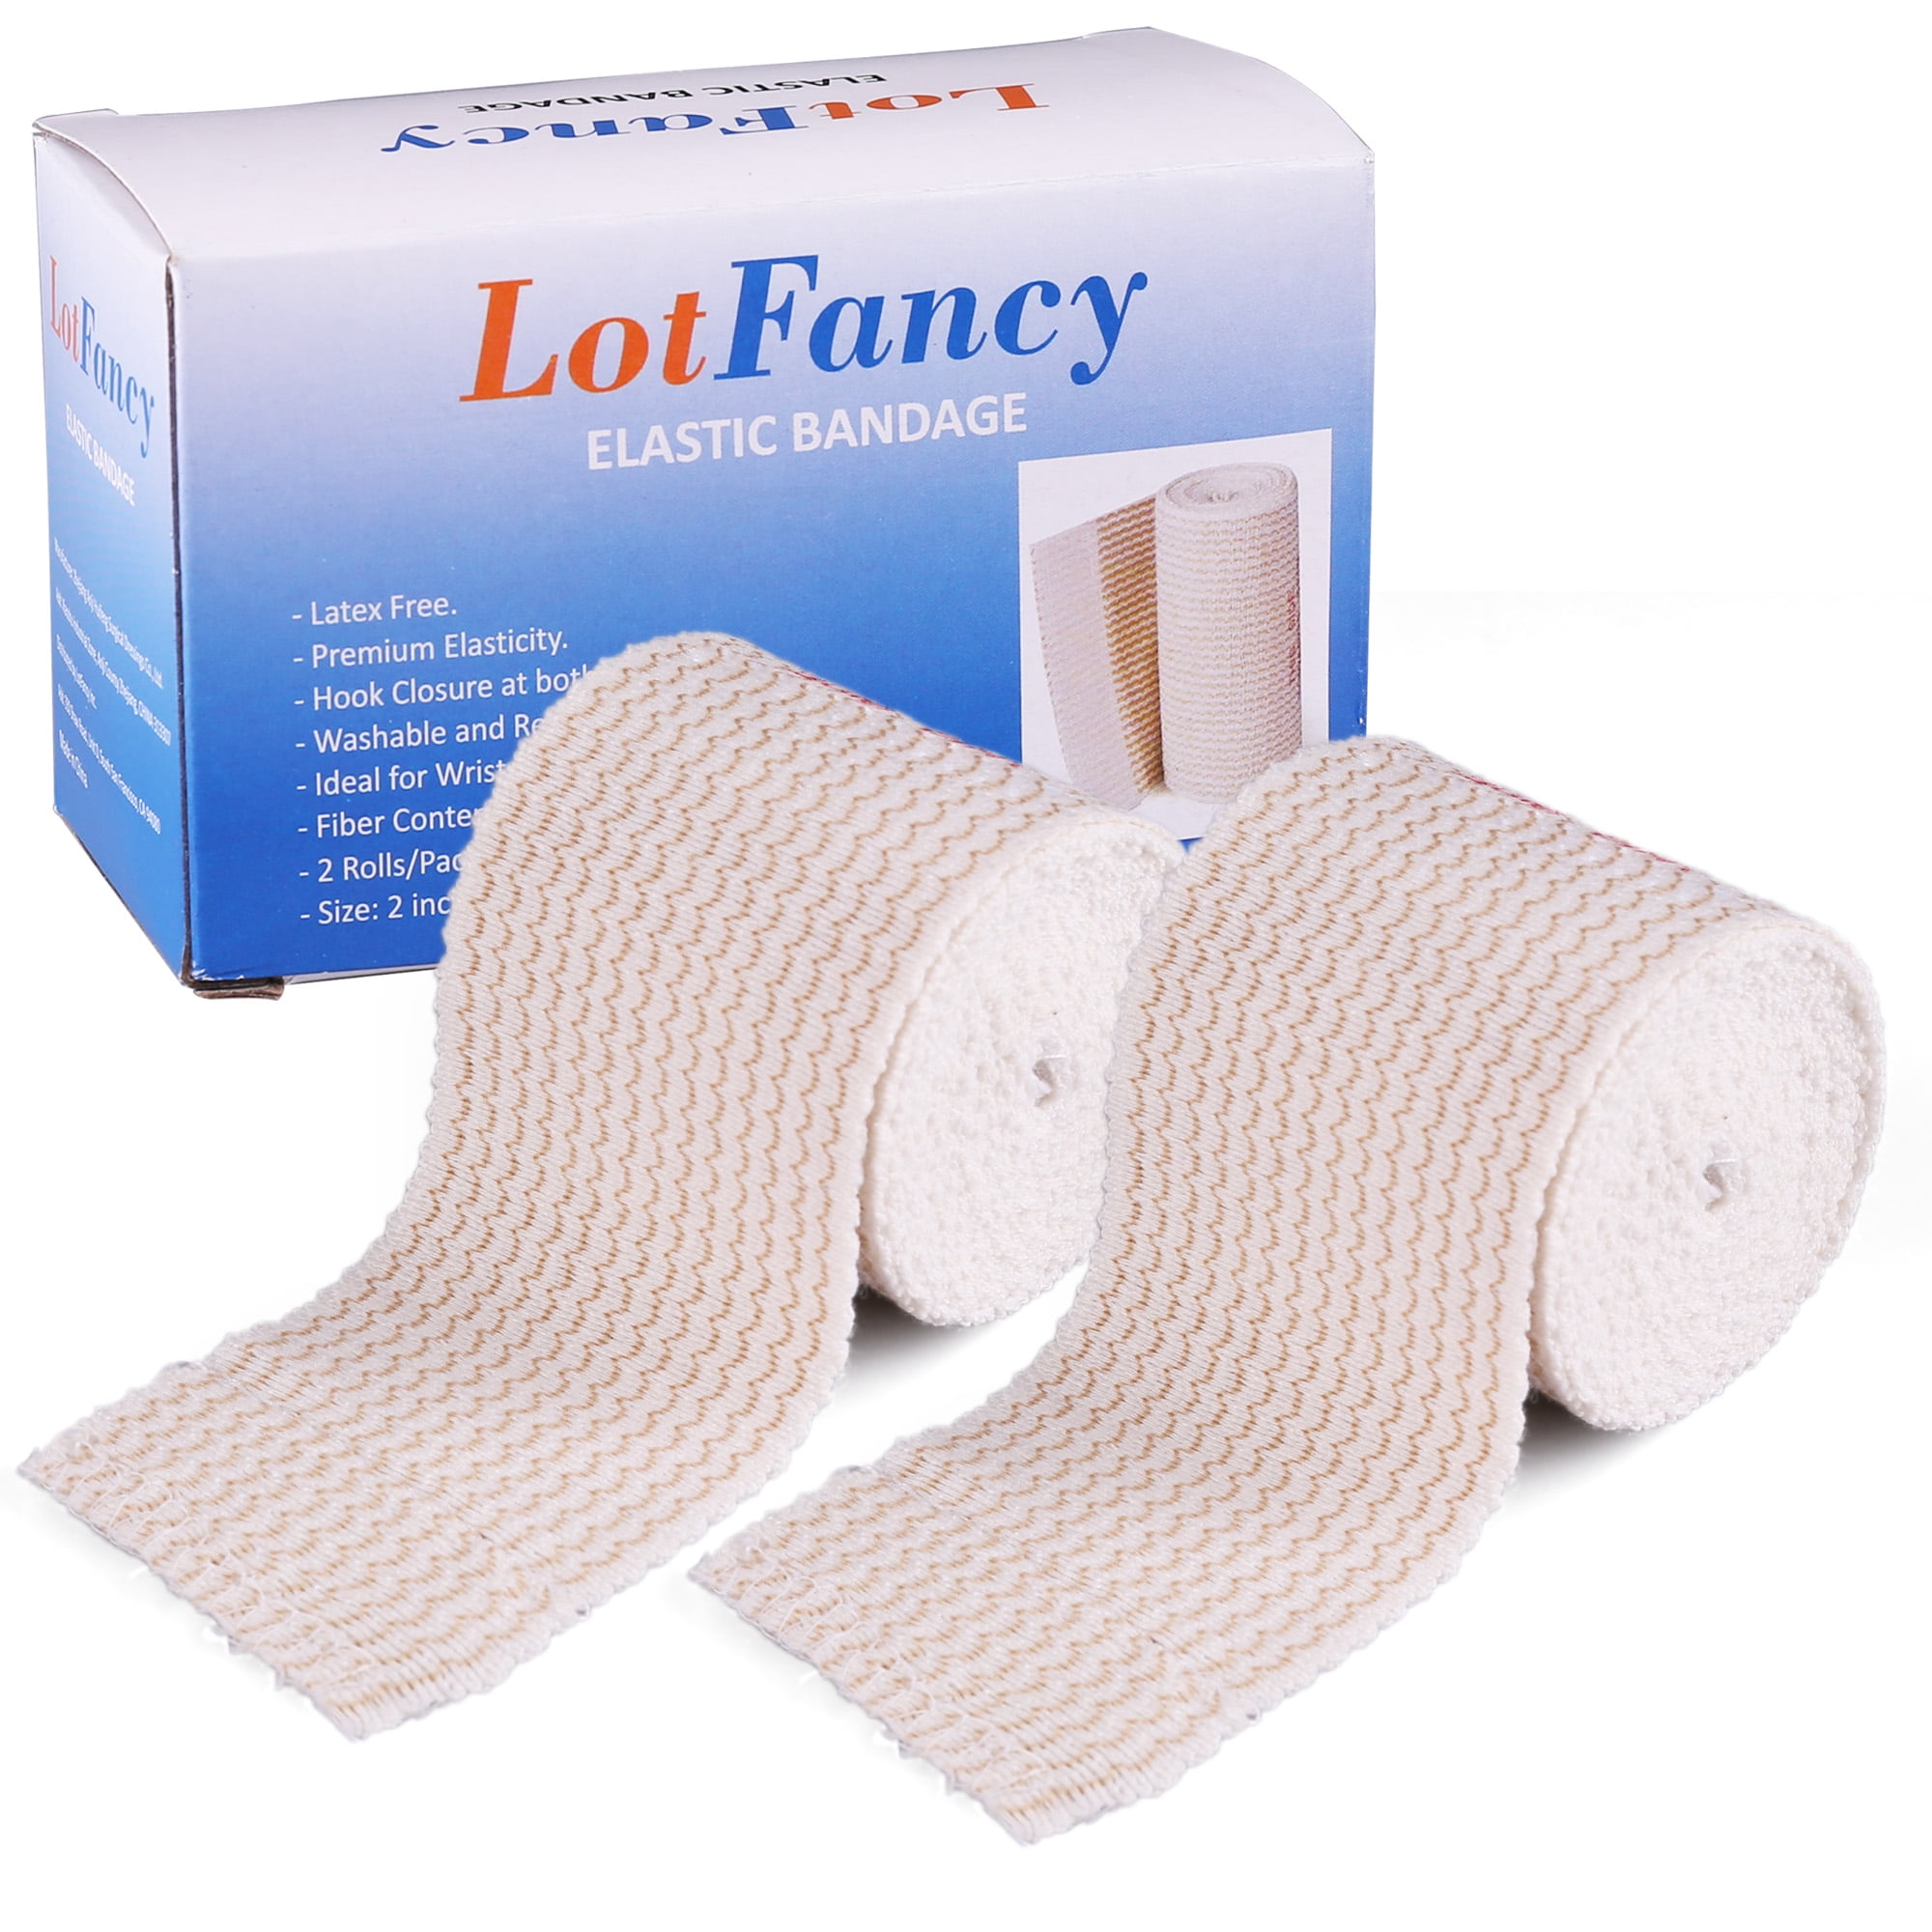 Elastic Bandage Medi-Pak - Item Number 13-242BX - 2 X 4-1/2 Yard - 10 Each  / Box 